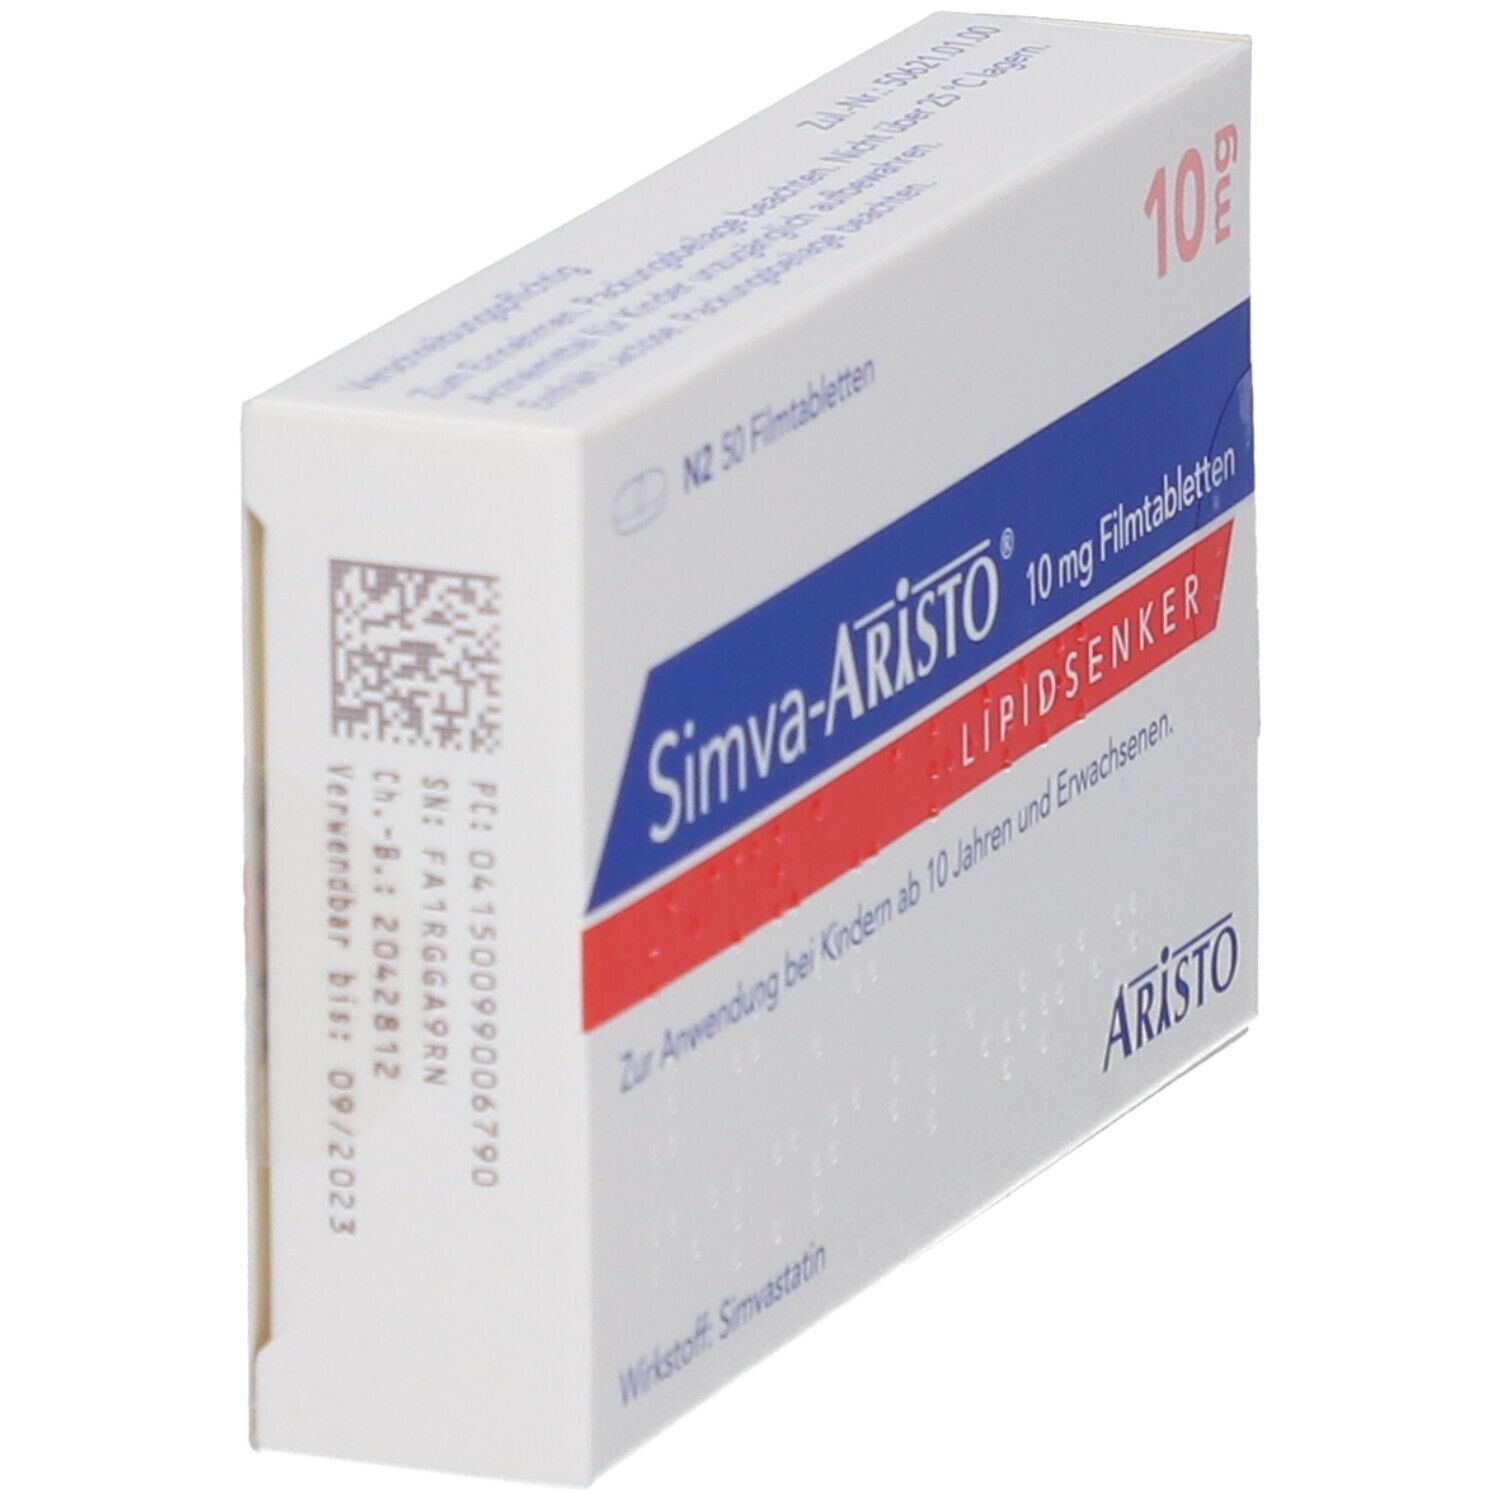 Simva-Aristo® 10 mg